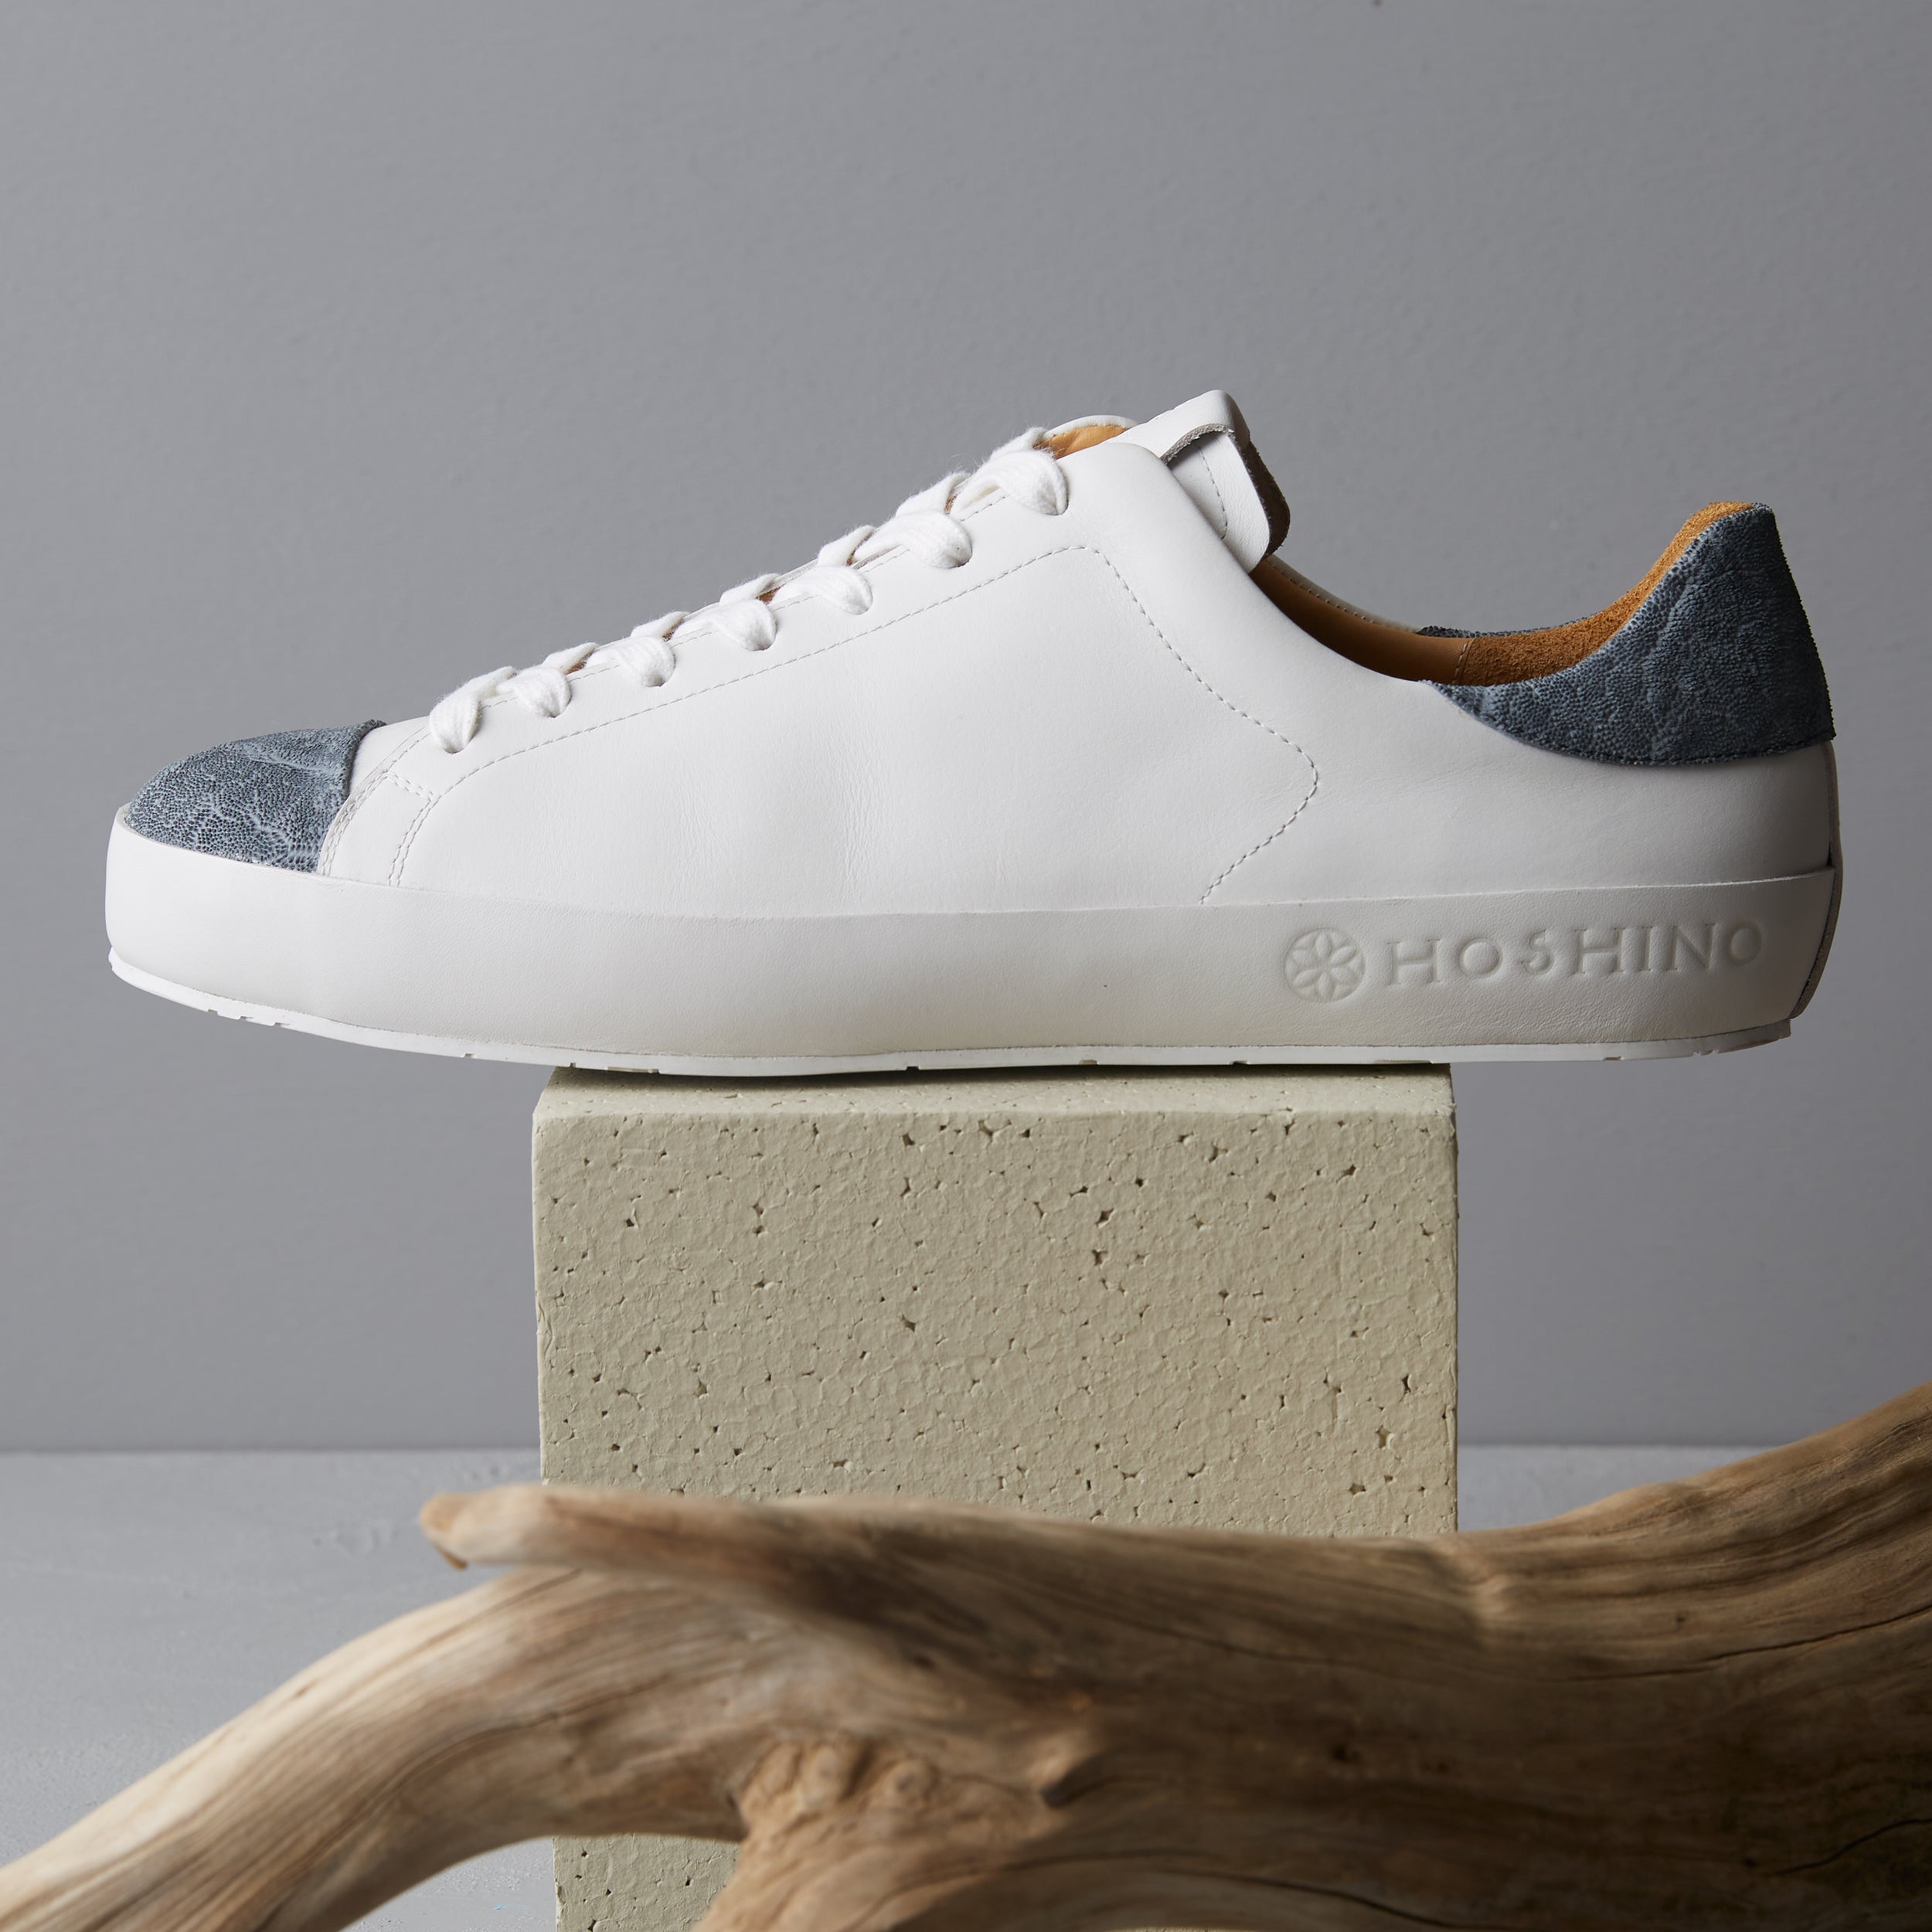 [men's] Liberte - low-top sneakers - combination toe white x grey elephant